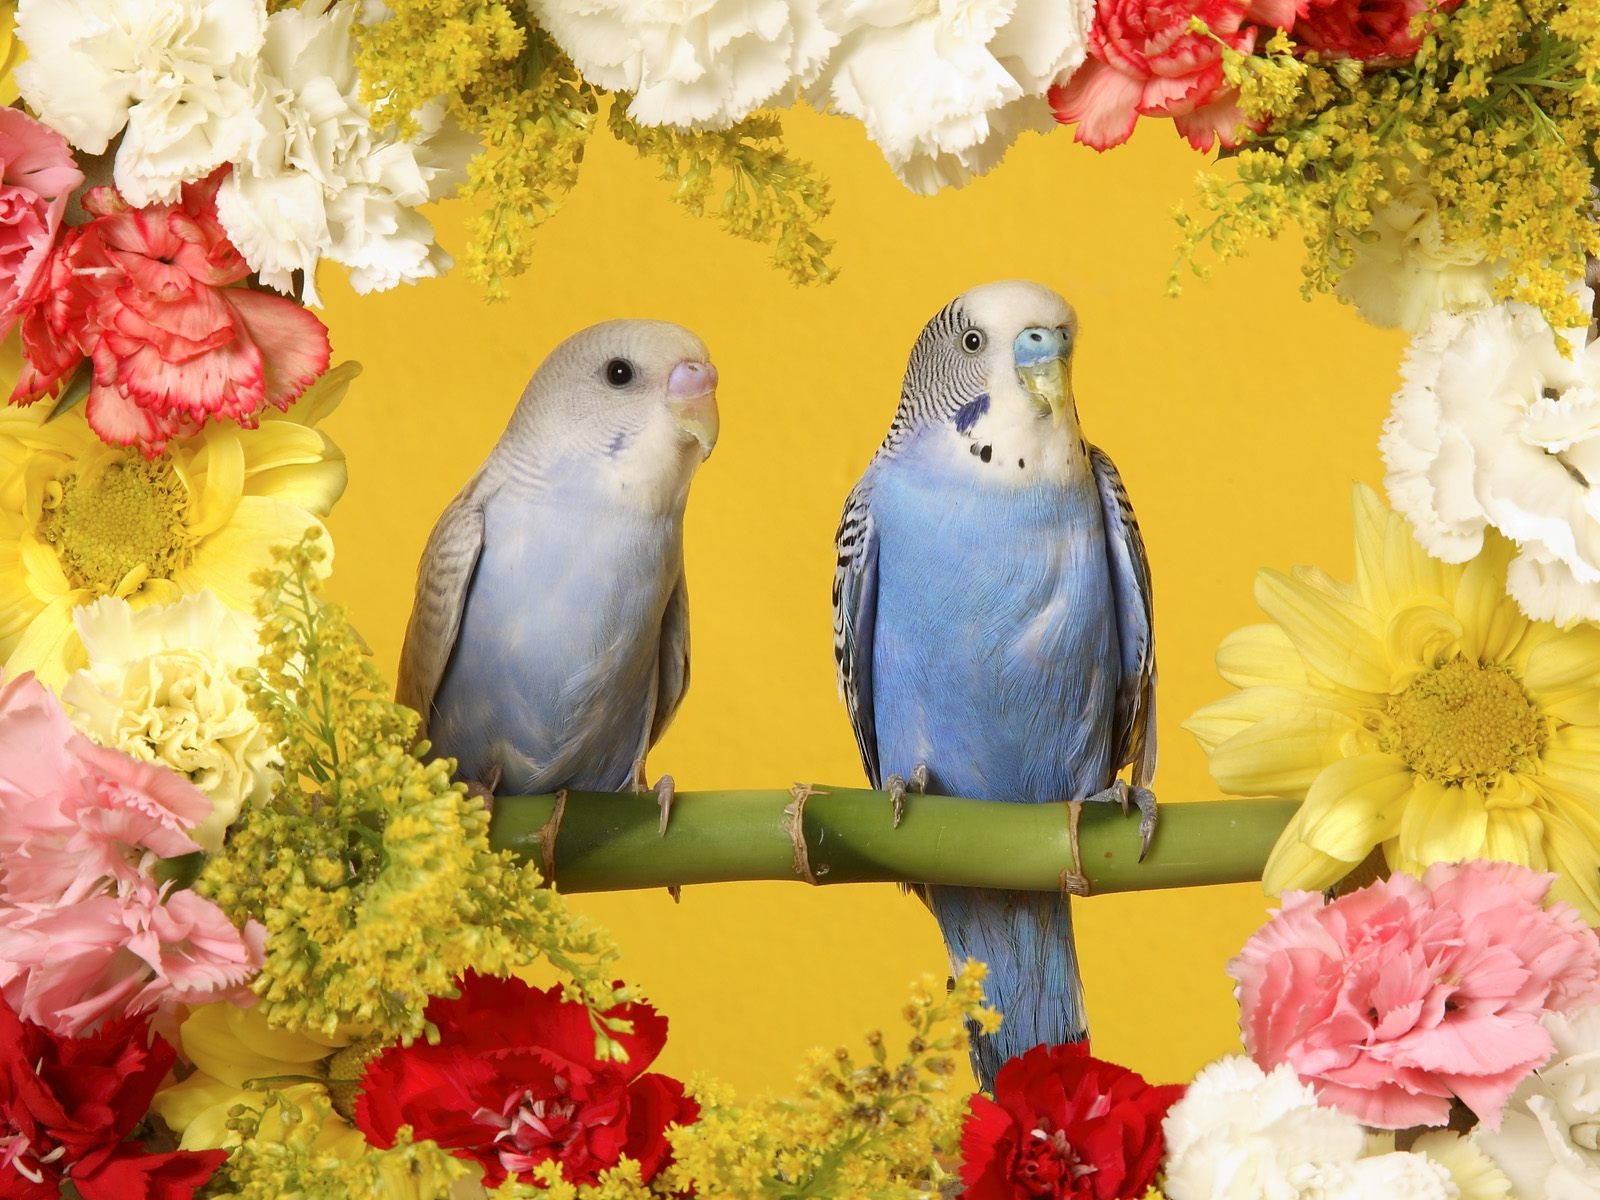 262293 descargar imagen animales, periquito, ave, flor, loro, aves: fondos de pantalla y protectores de pantalla gratis